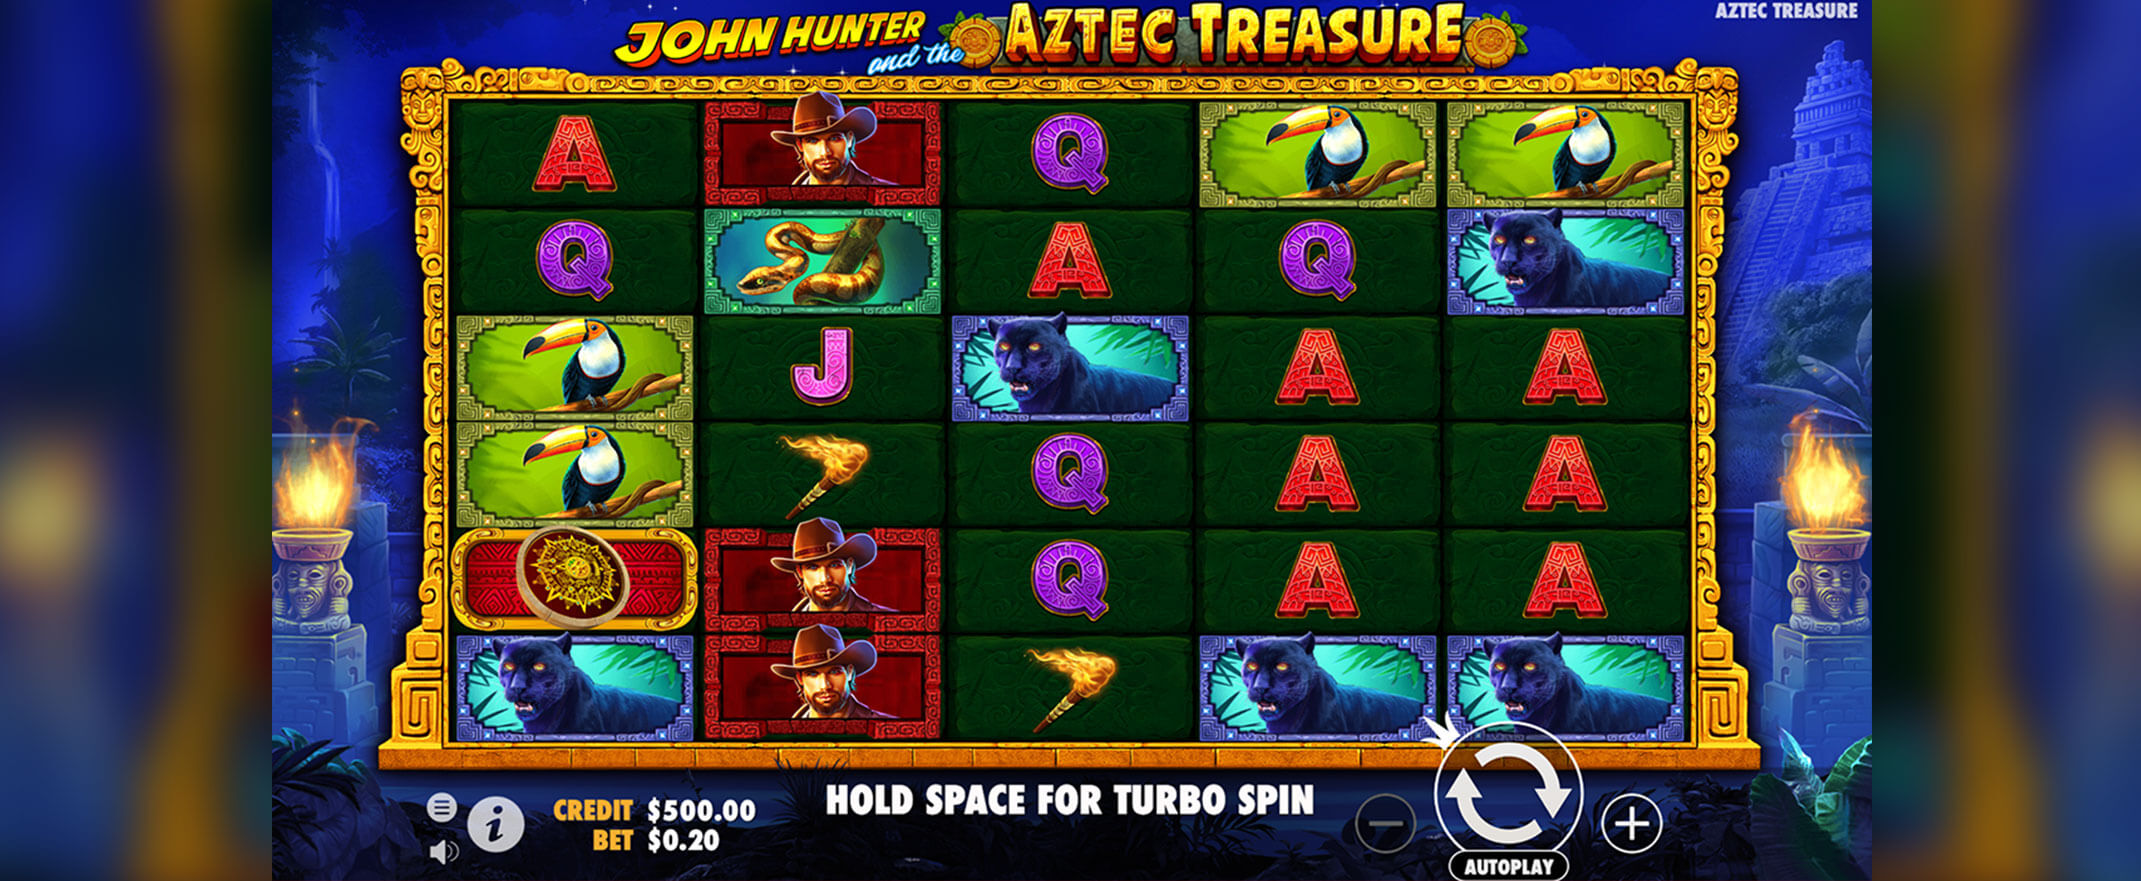 John Hunter and the Aztec Treasure peliautomaatti Pragmatic Playlta